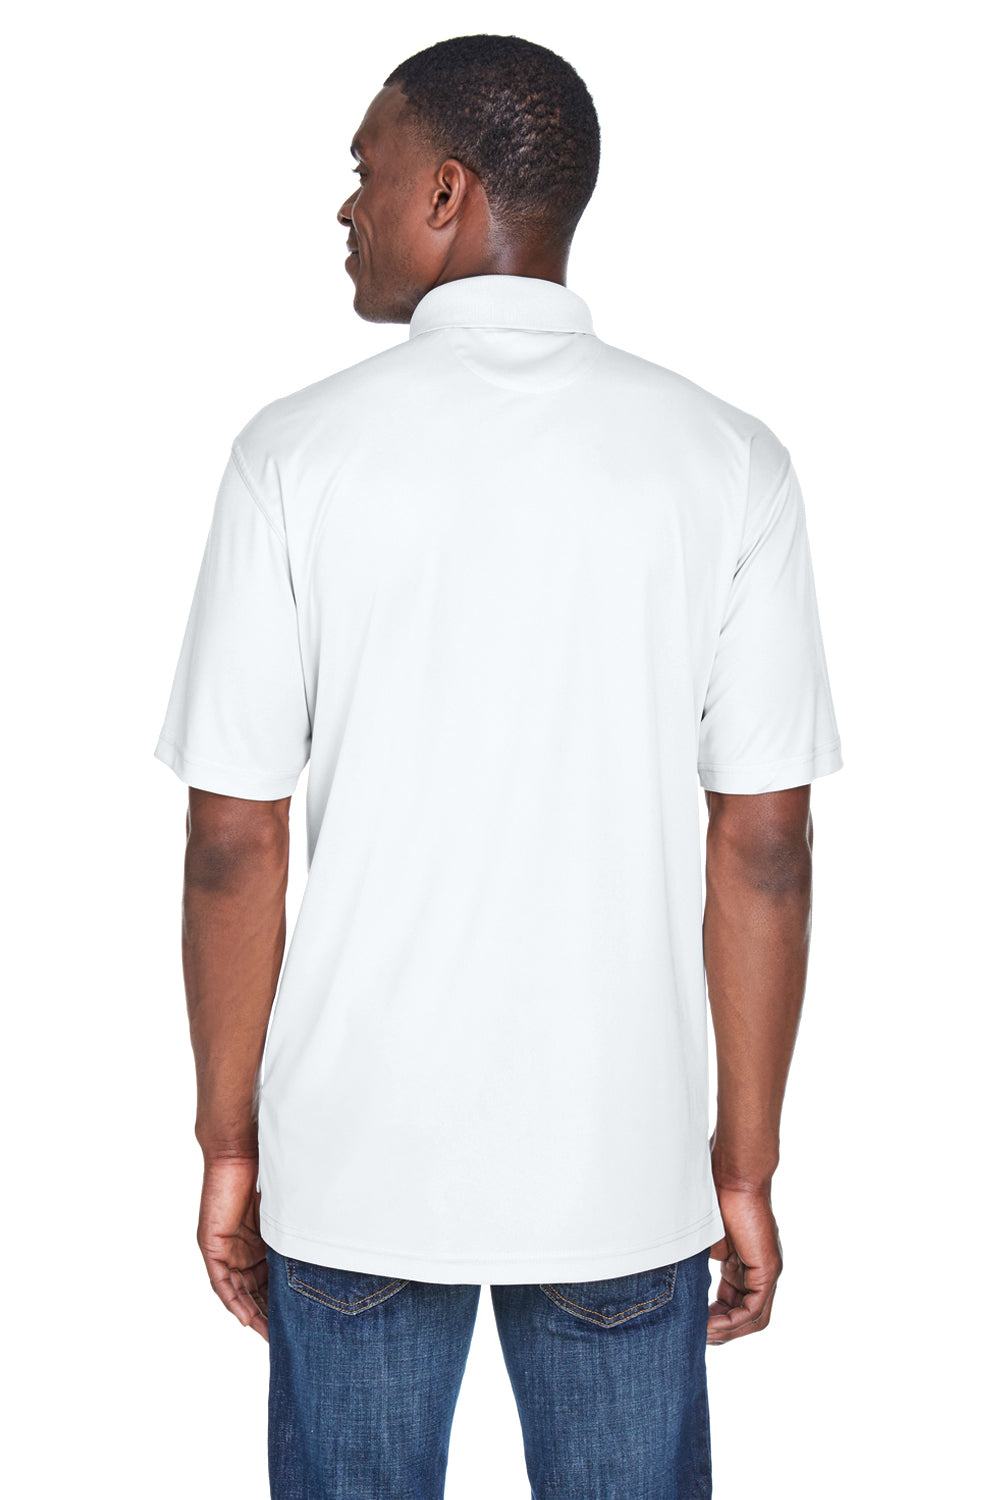 UltraClub 8425 Mens Cool & Dry Performance Moisture Wicking Short Sleeve Polo Shirt White Back